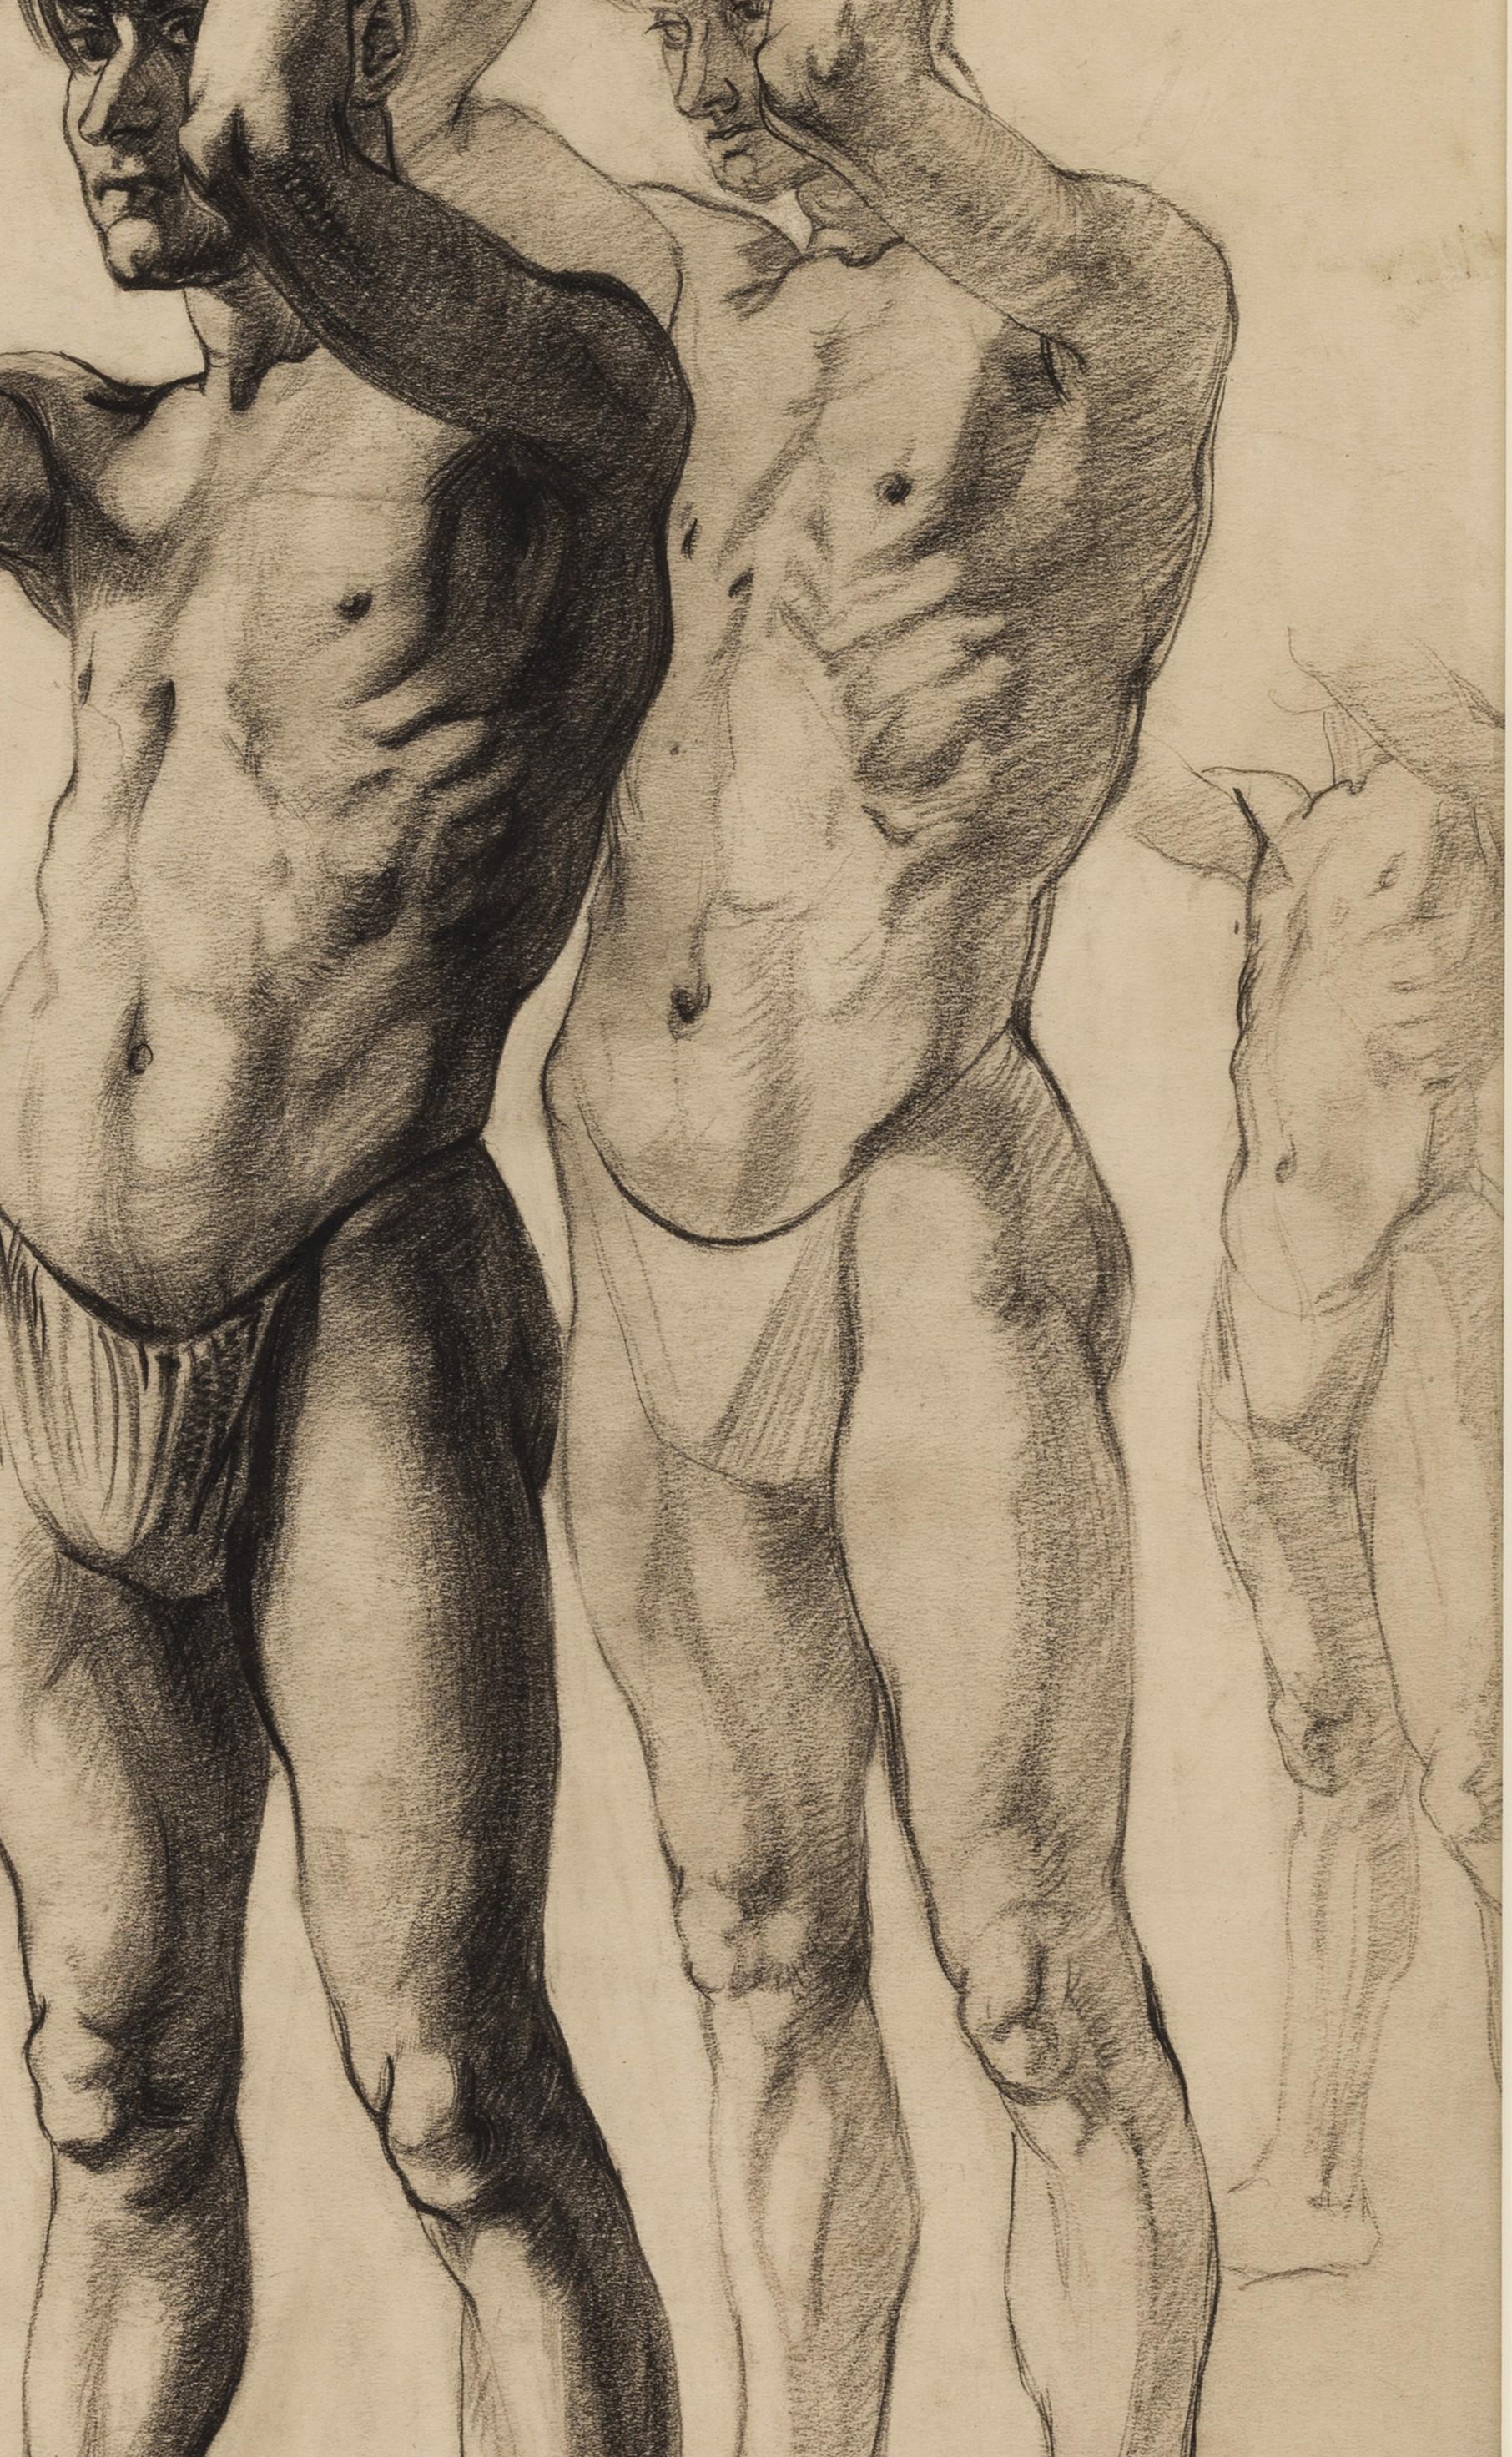 Studies of Man with Arms Raised - Post-War Art by Robert Colquhoun